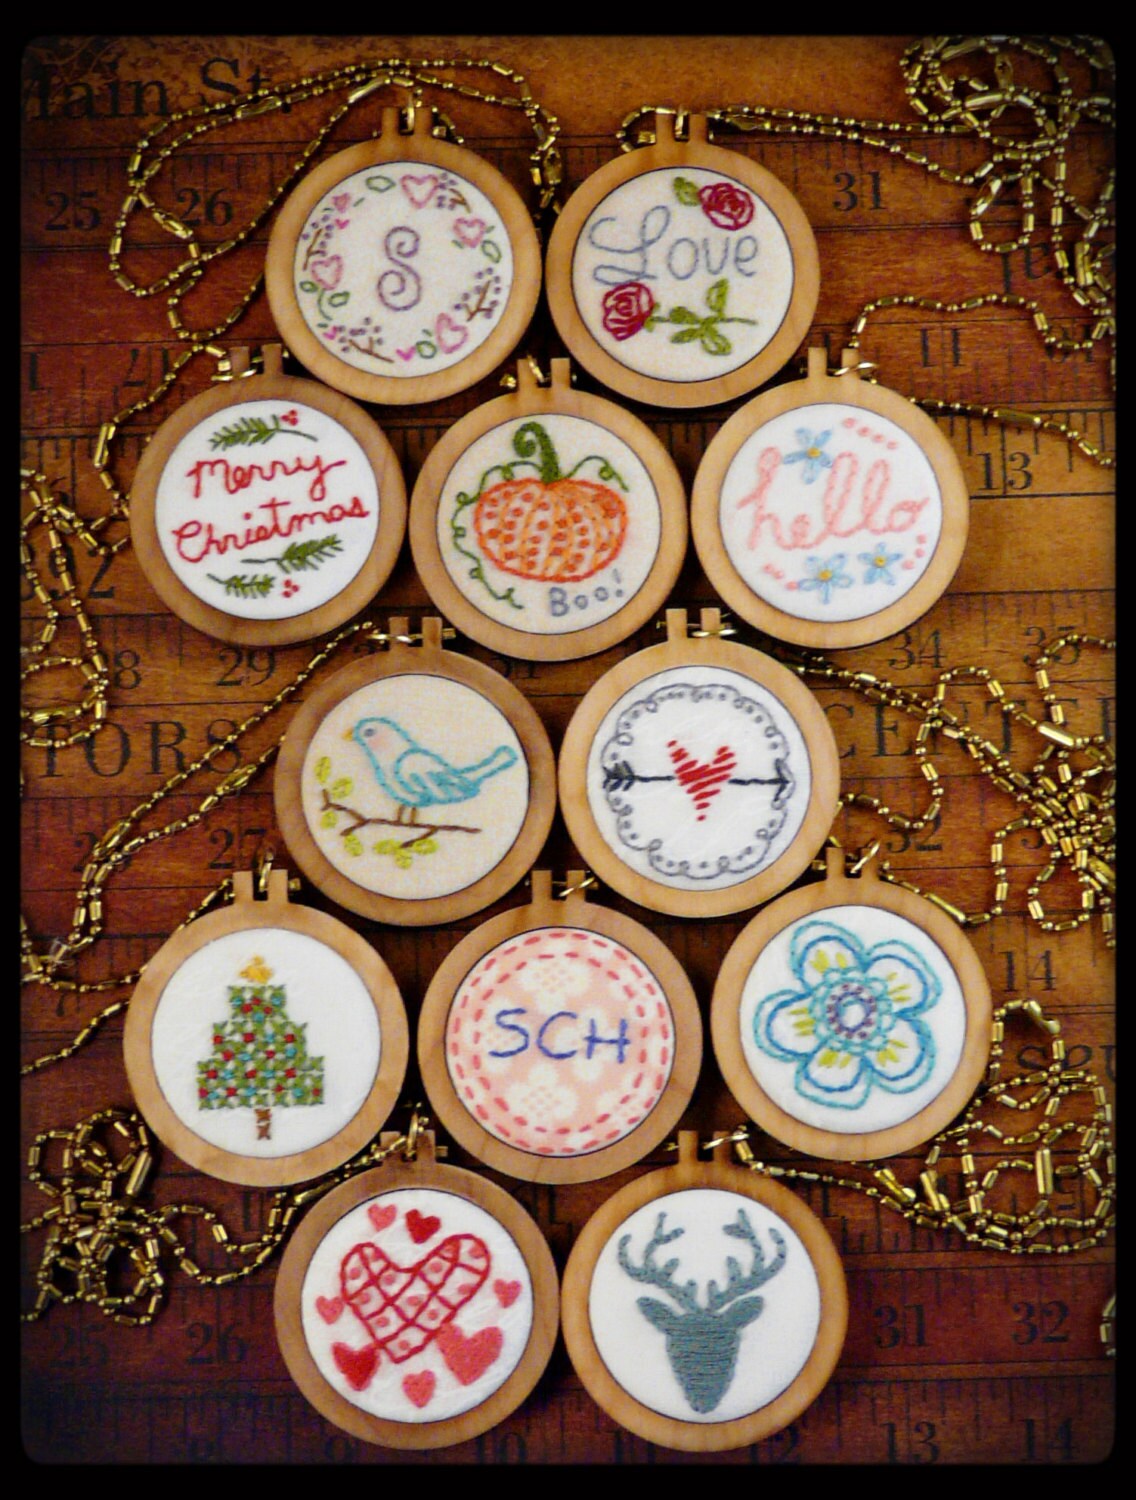 mini embroidery hoops Archives - Hello! Hooray!